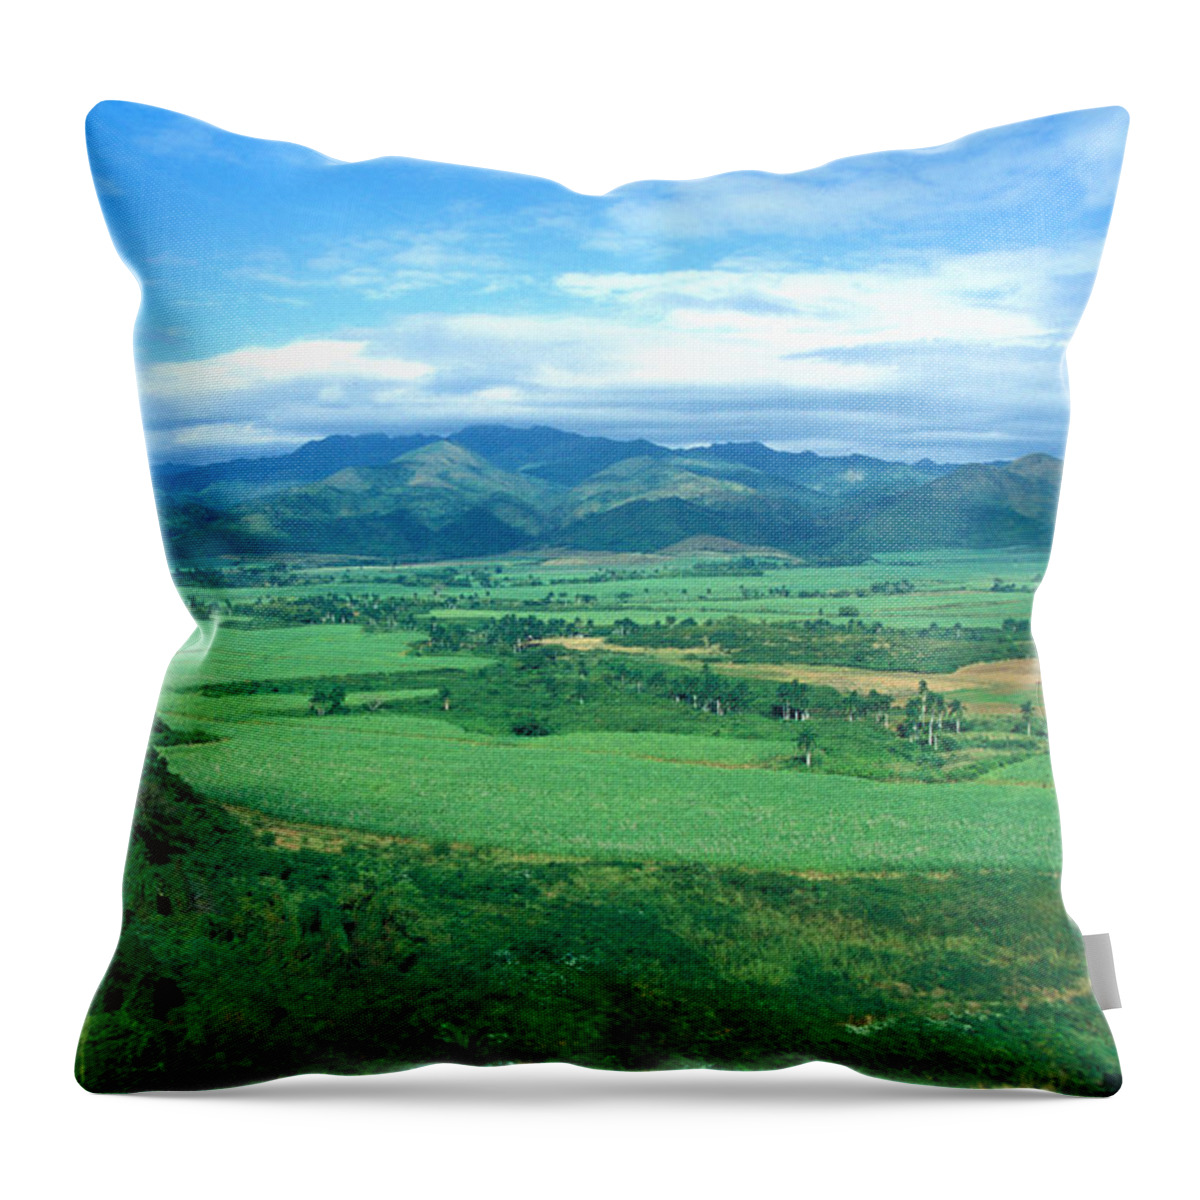 Sugar Cane Throw Pillow featuring the photograph Plantation by Ralf Kaiser